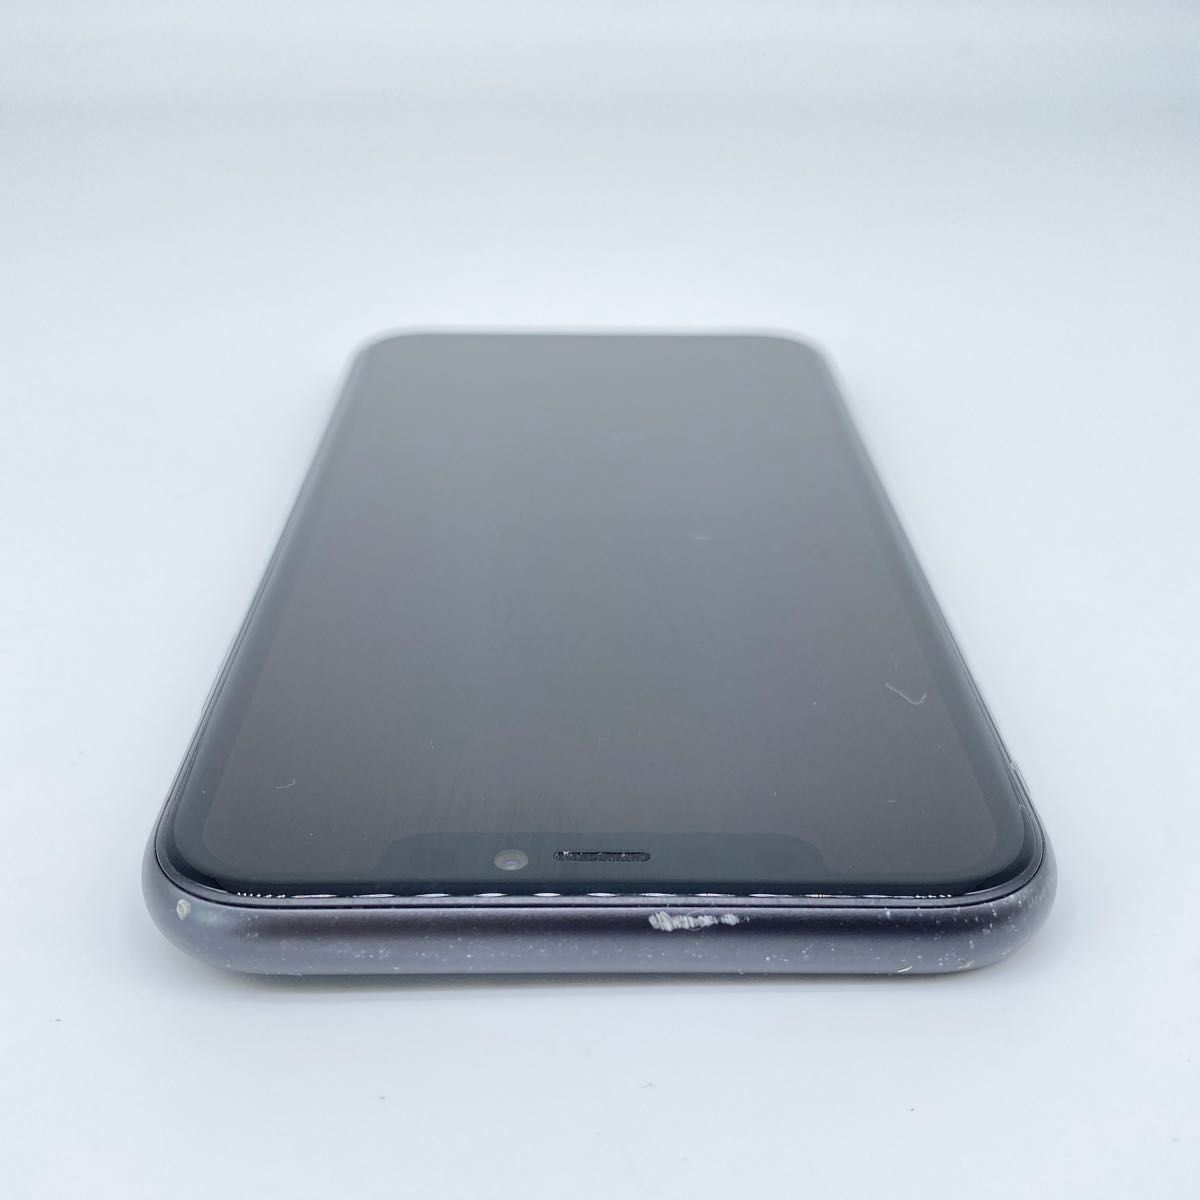 即配【良品】SBM◯ Apple iPhone 11 64GB A2221 MWLT2J/A ブラック 動作確認済 送料無料